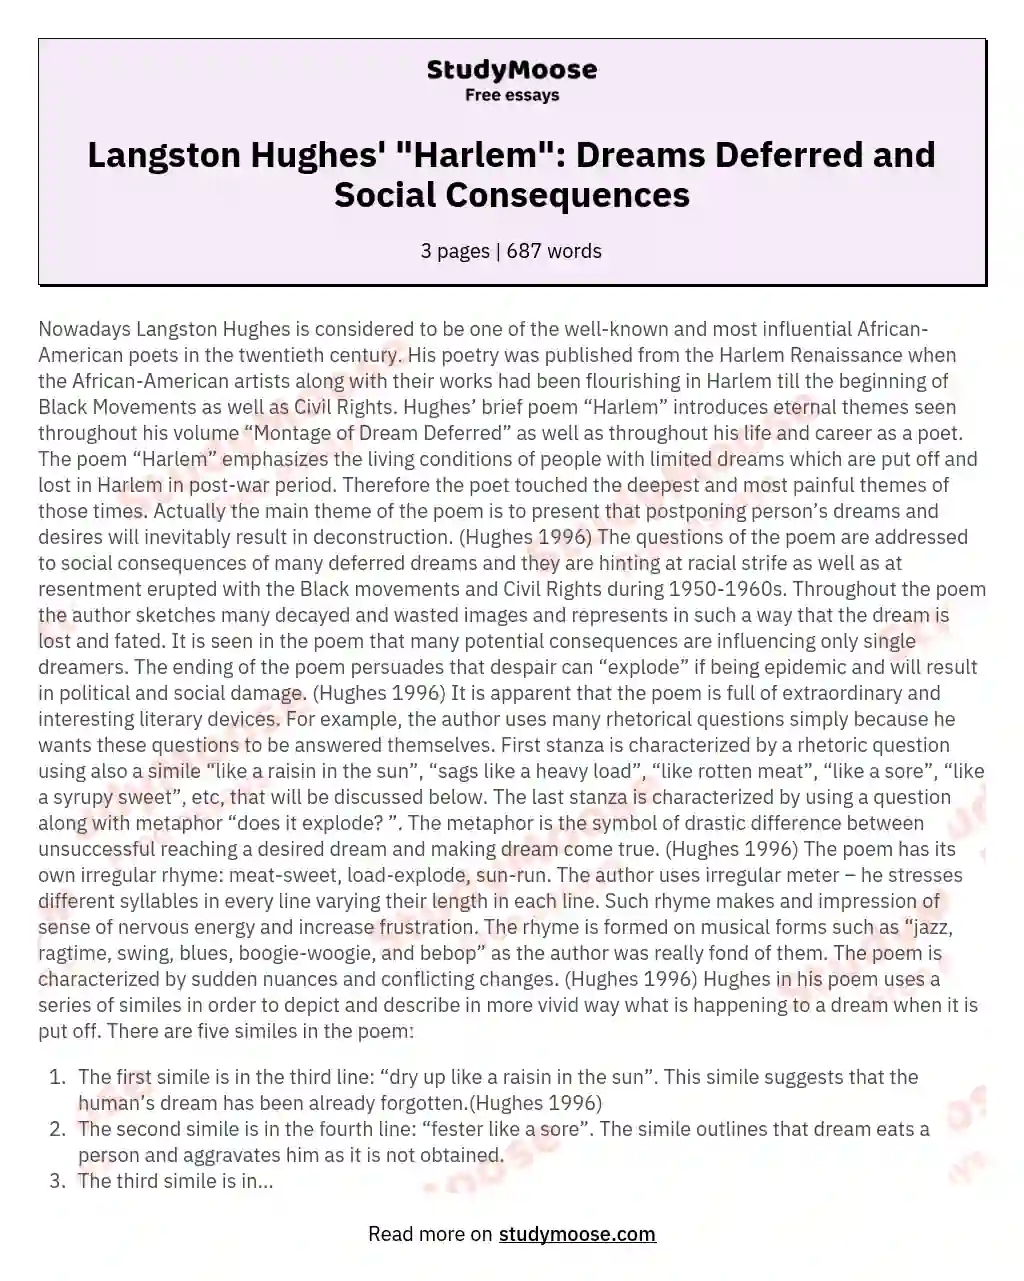 Langston Hughes' "Harlem": Dreams Deferred and Social Consequences essay